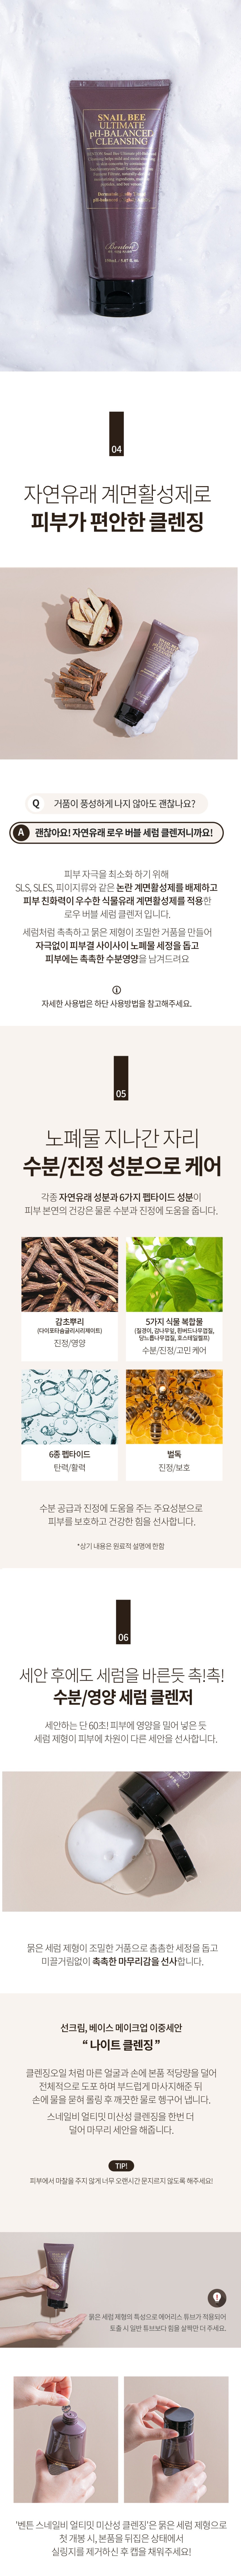 Benton Snail Bee Ultimate pH Balanced Cleansing korean skincare product online shop malaysia czech uk3